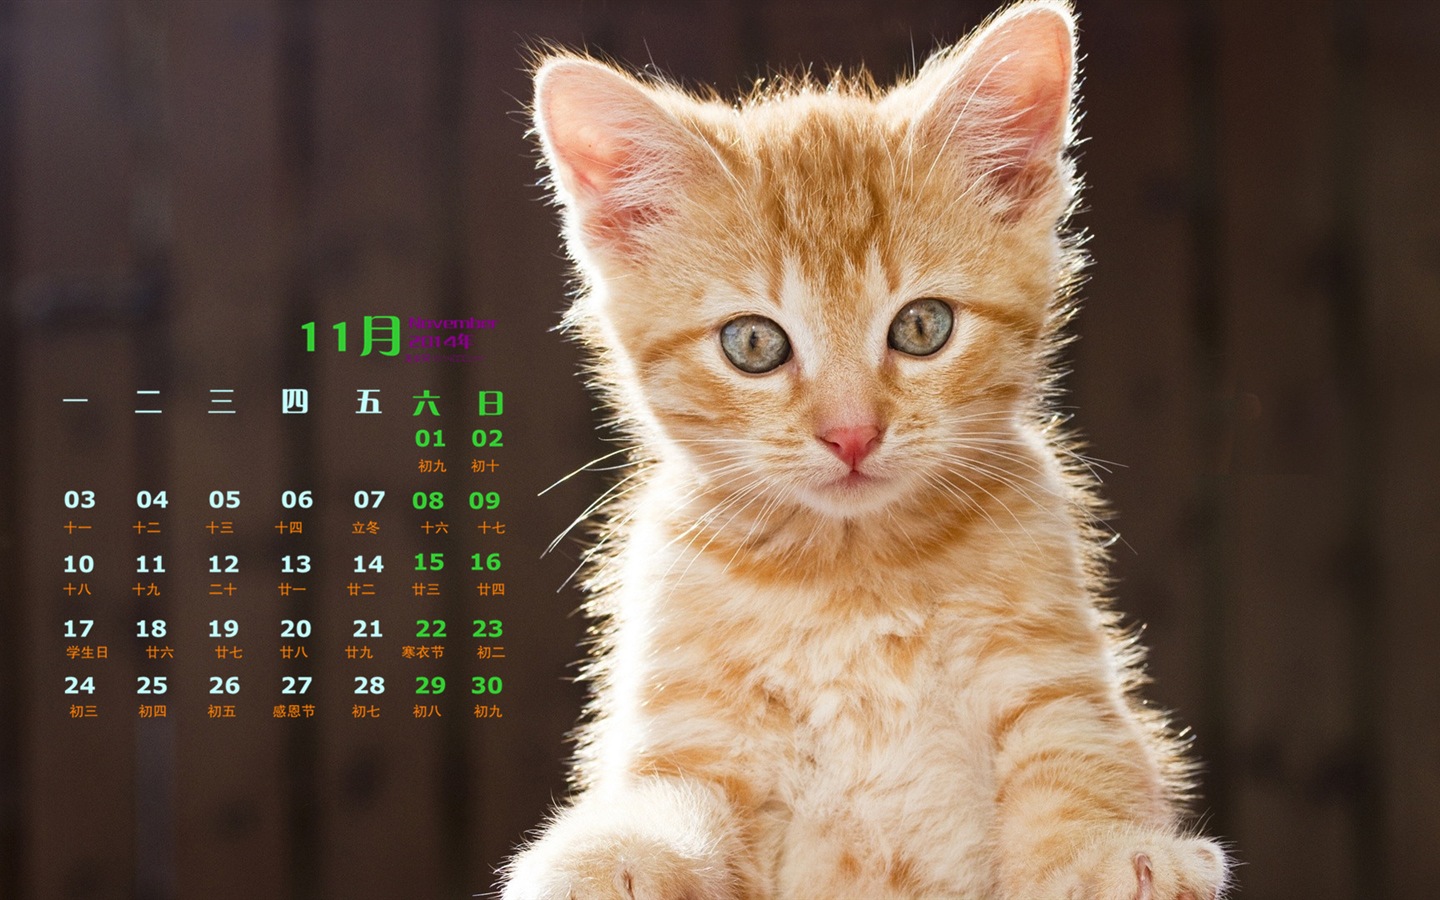 November 2014 Calendar wallpaper(1) #5 - 1440x900